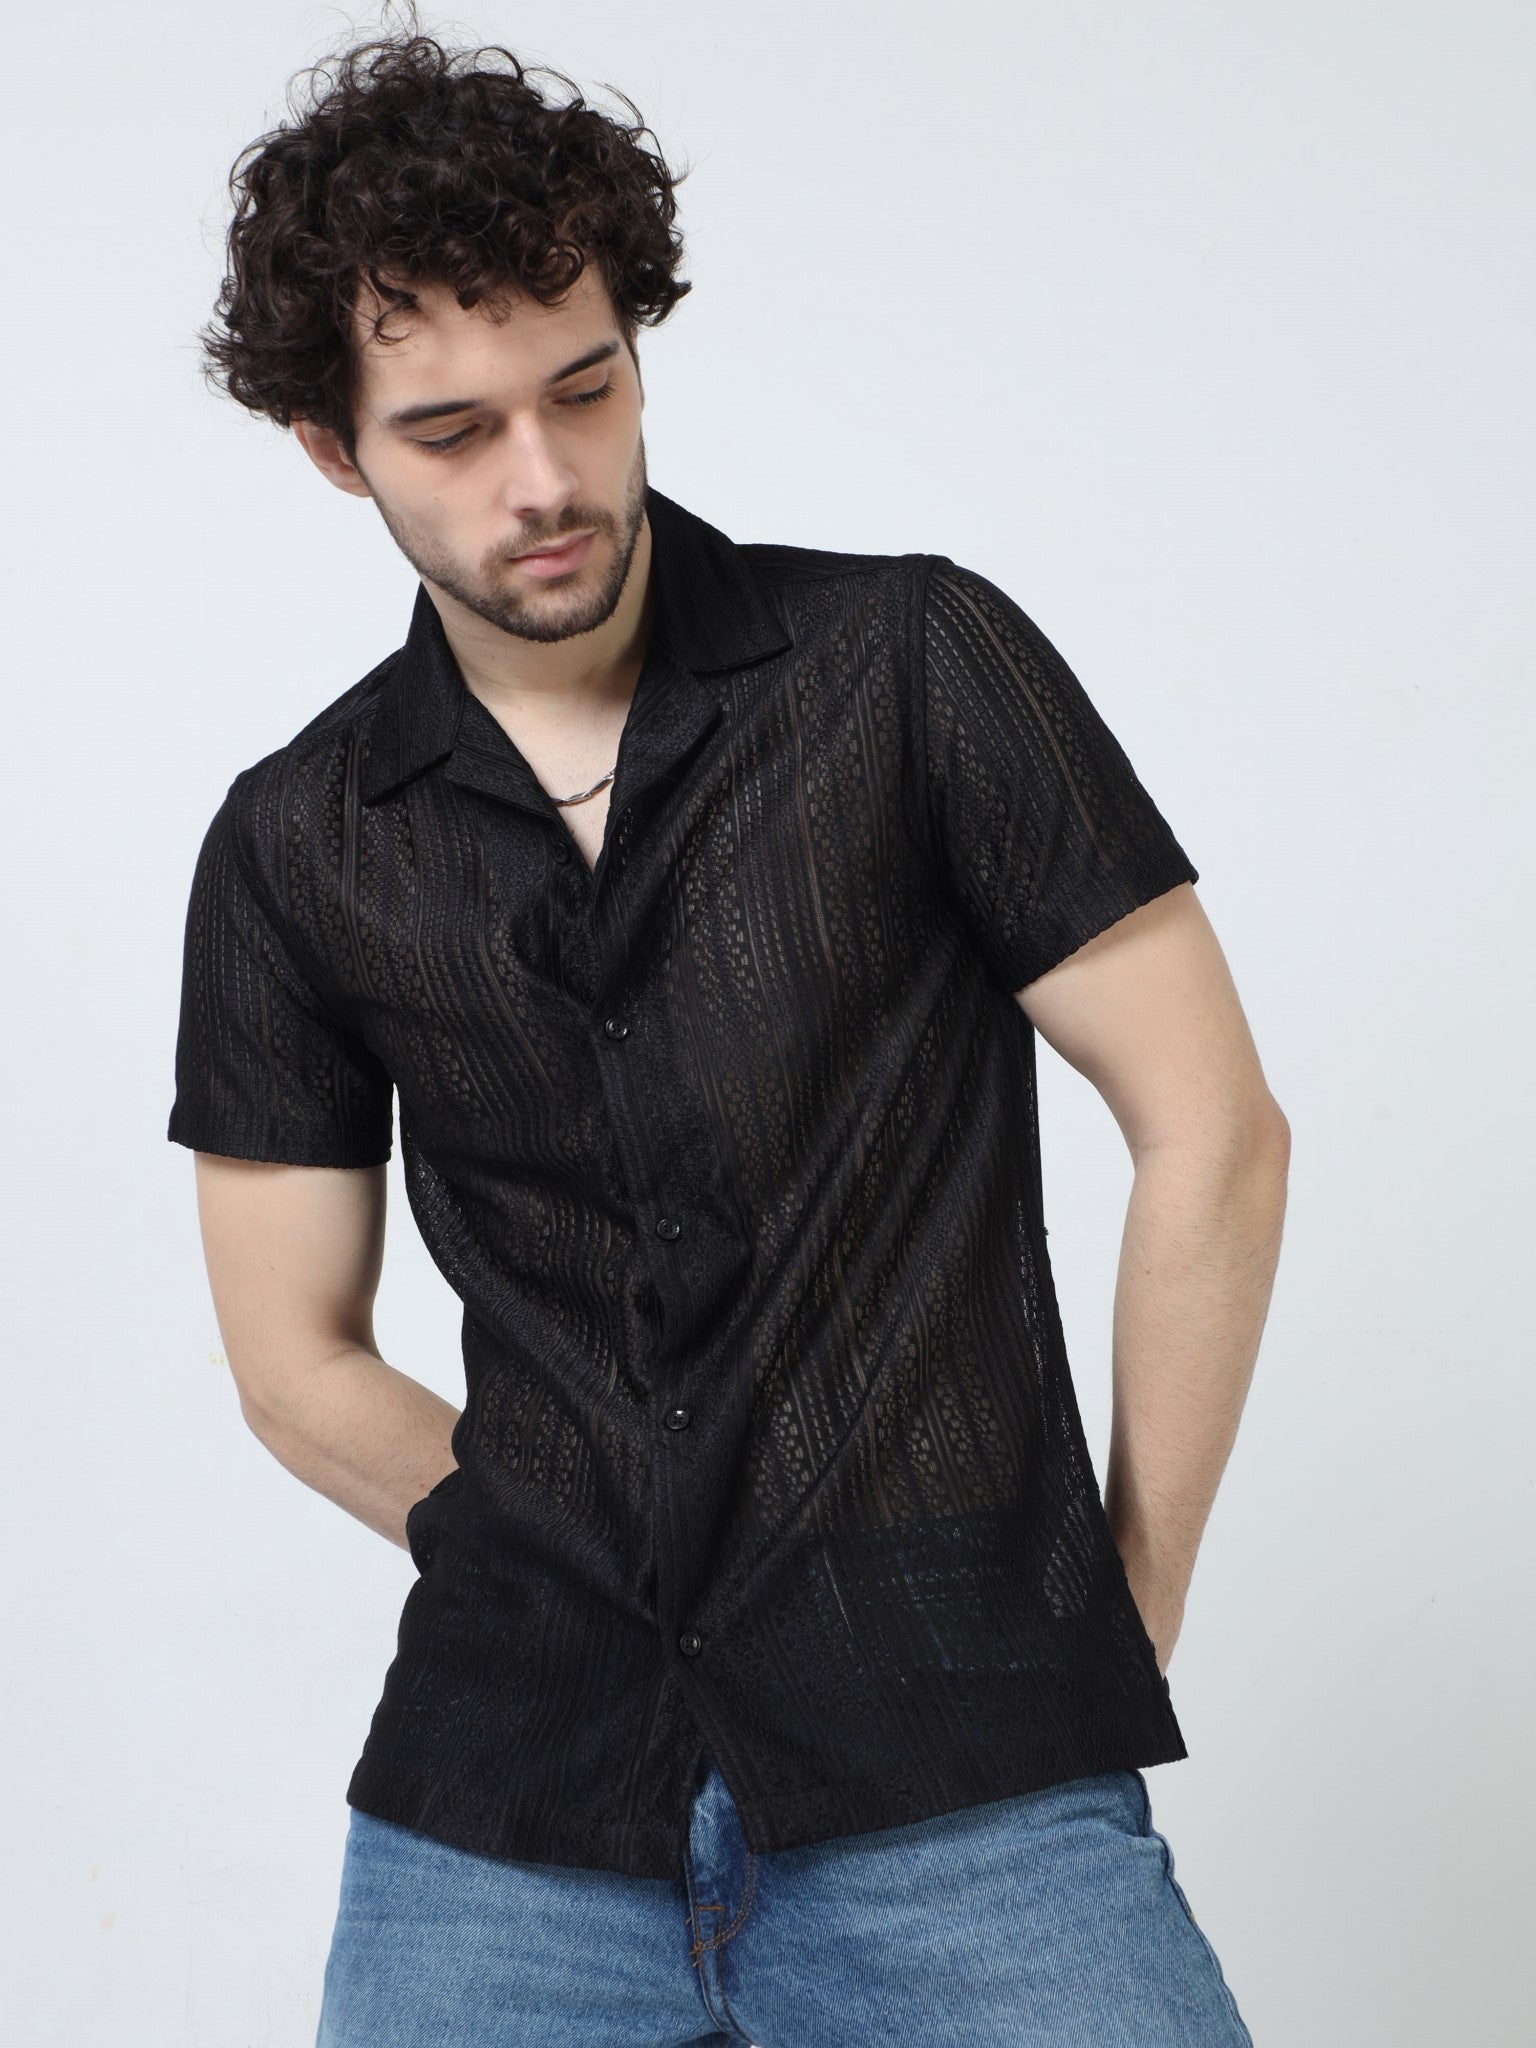 Drop Crochet Black Shirt for Men